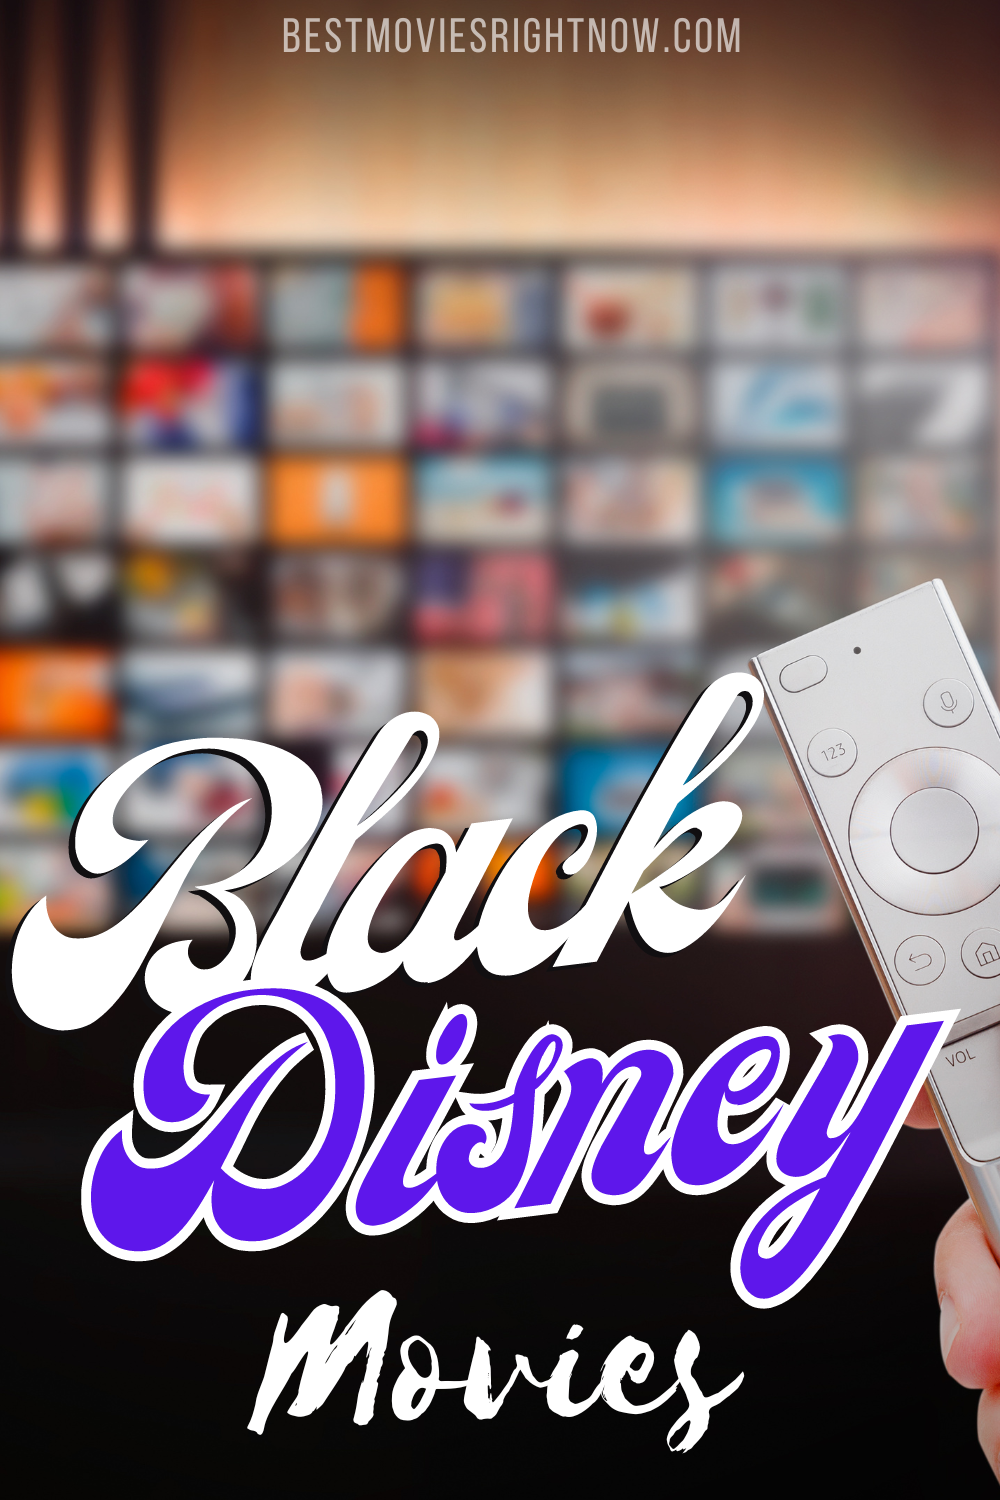 Black Disney Movies pin sized image